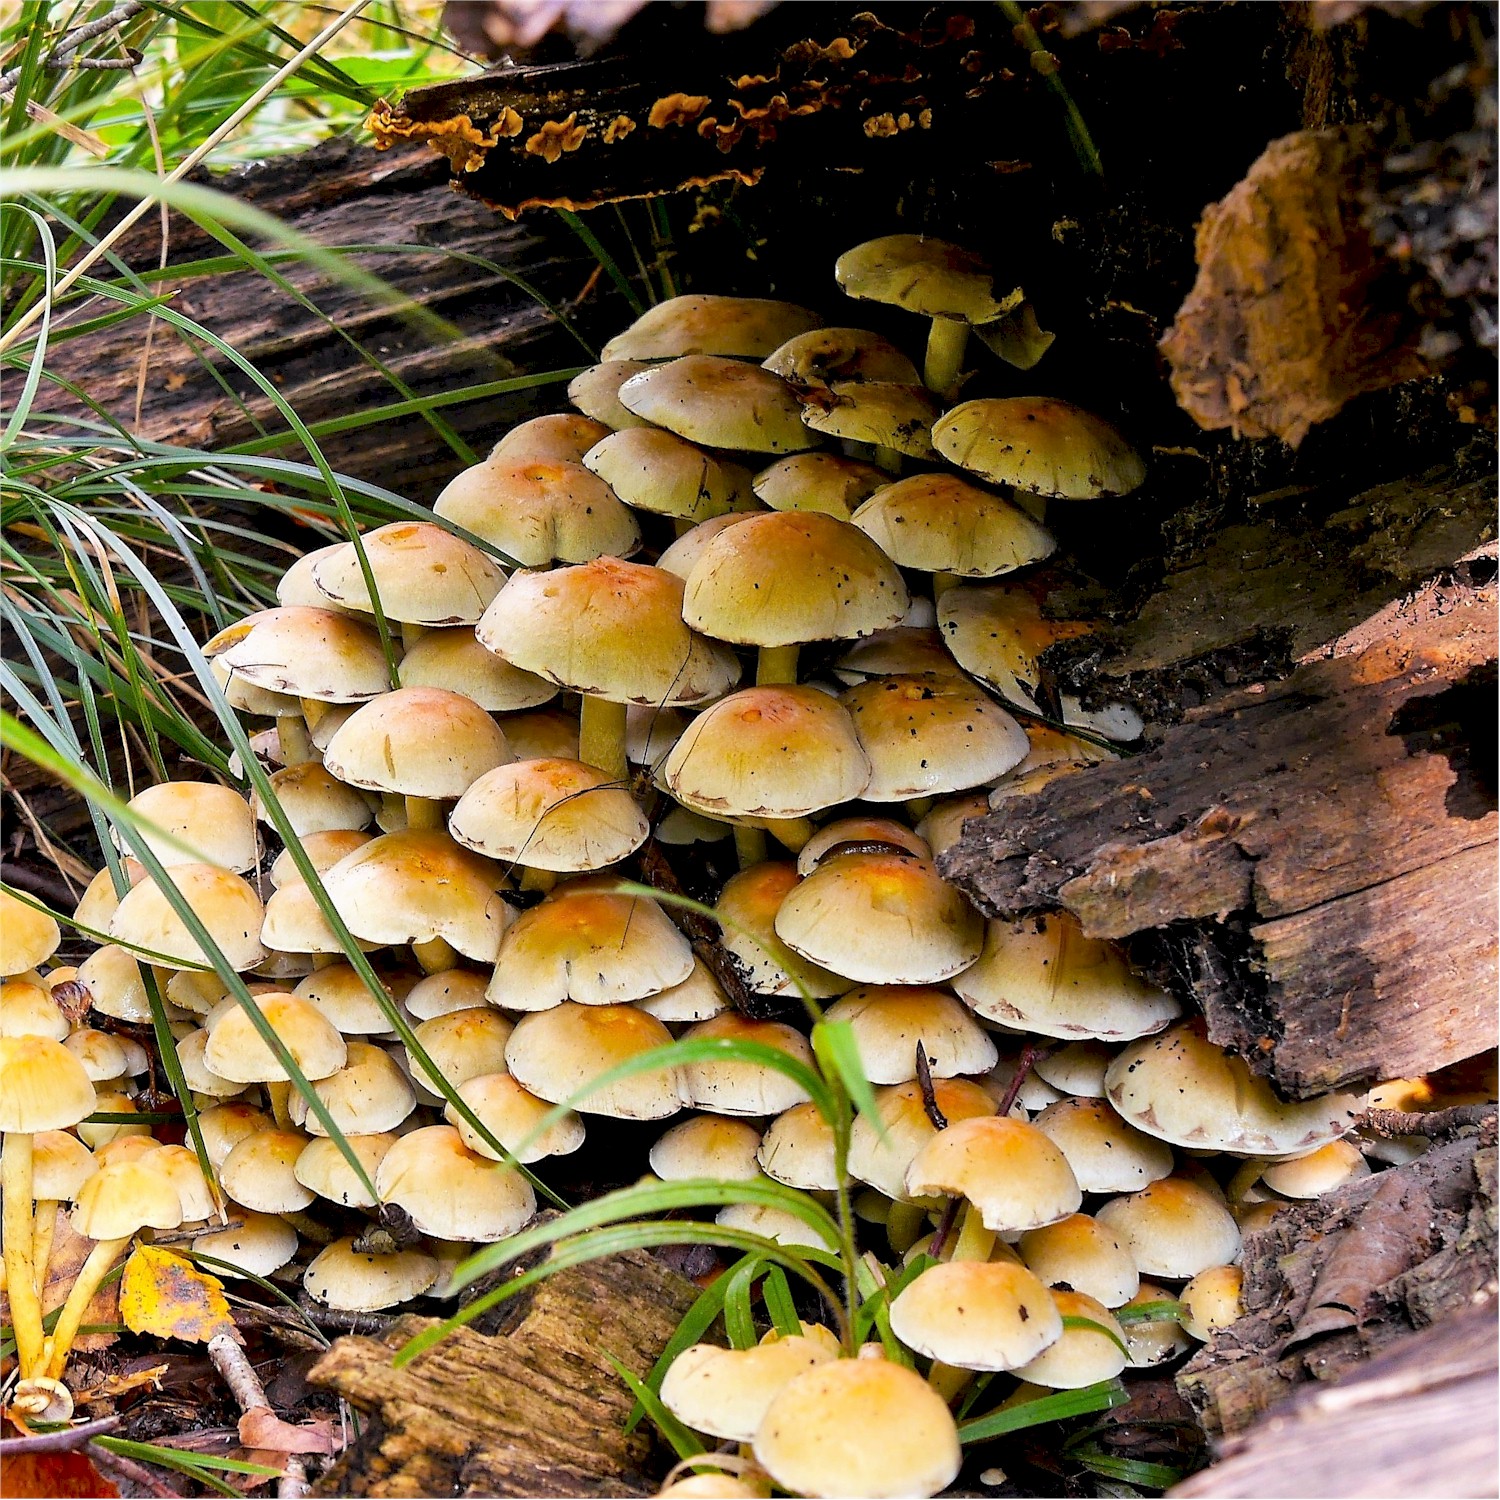  Savernake Forest Fungi